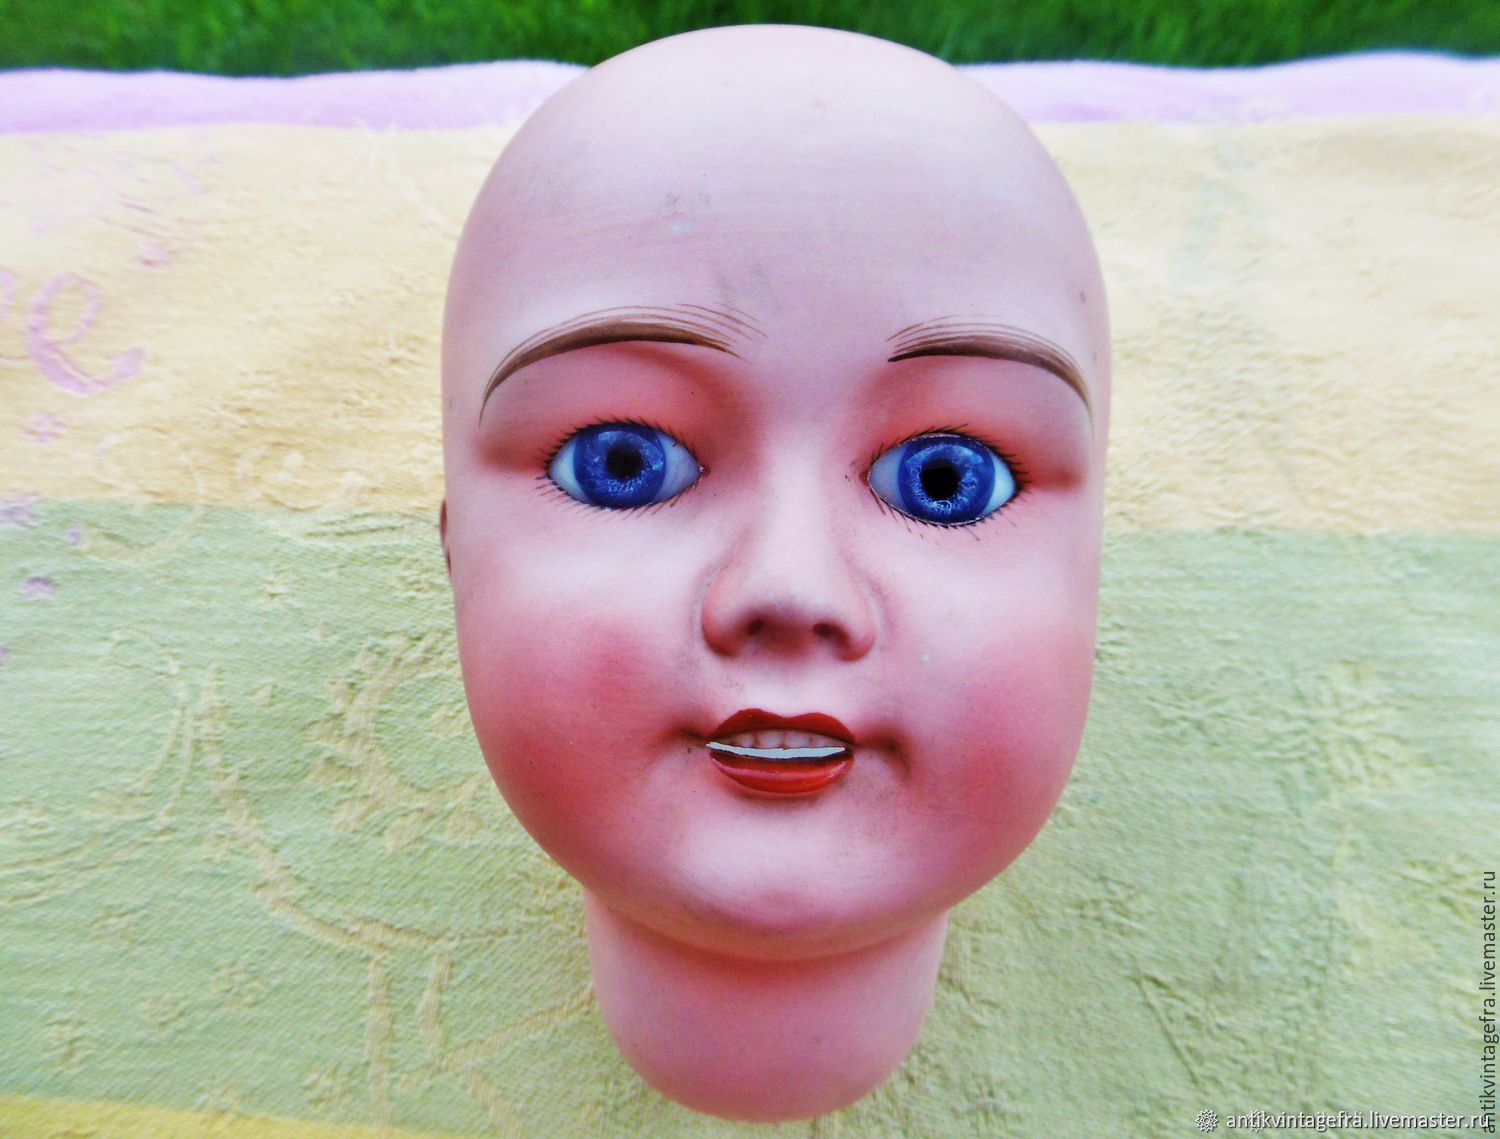 Голова пупса. Голова куклы. Голова куклы маленькая. Голова антикварной куклы.